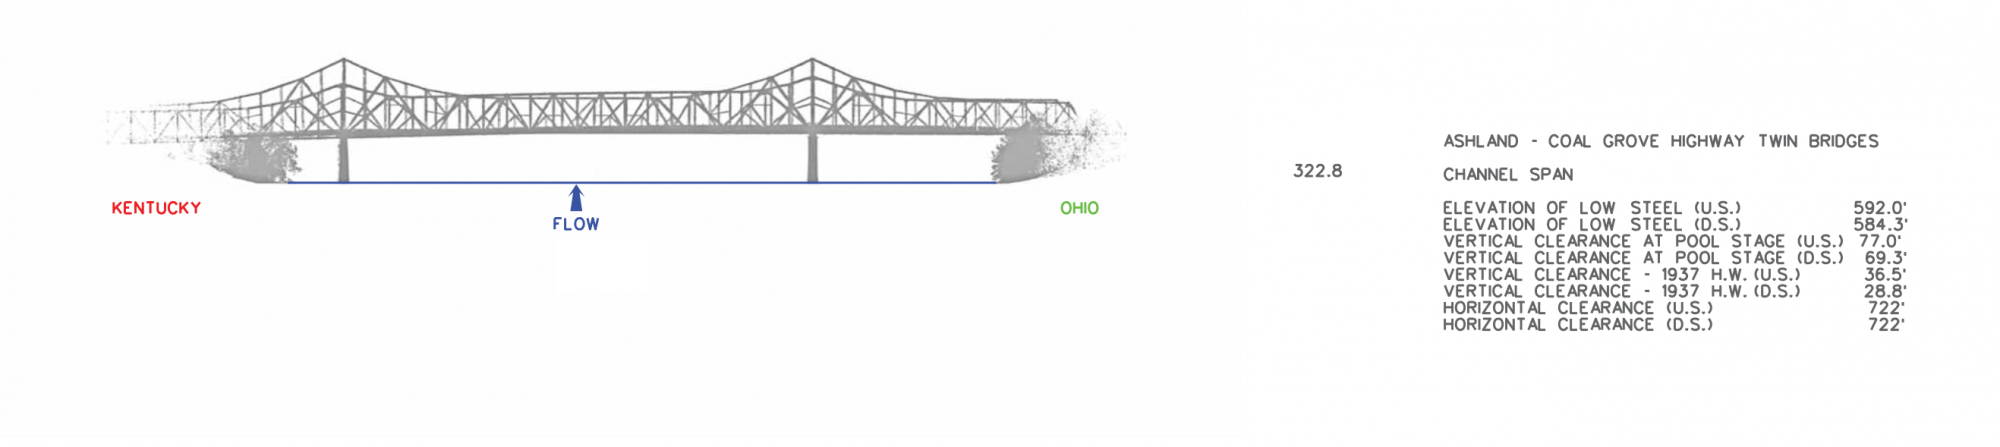 Ashland - Coal Grove Hwy Twin Bridges Clearances | Bridge Calculator LLC